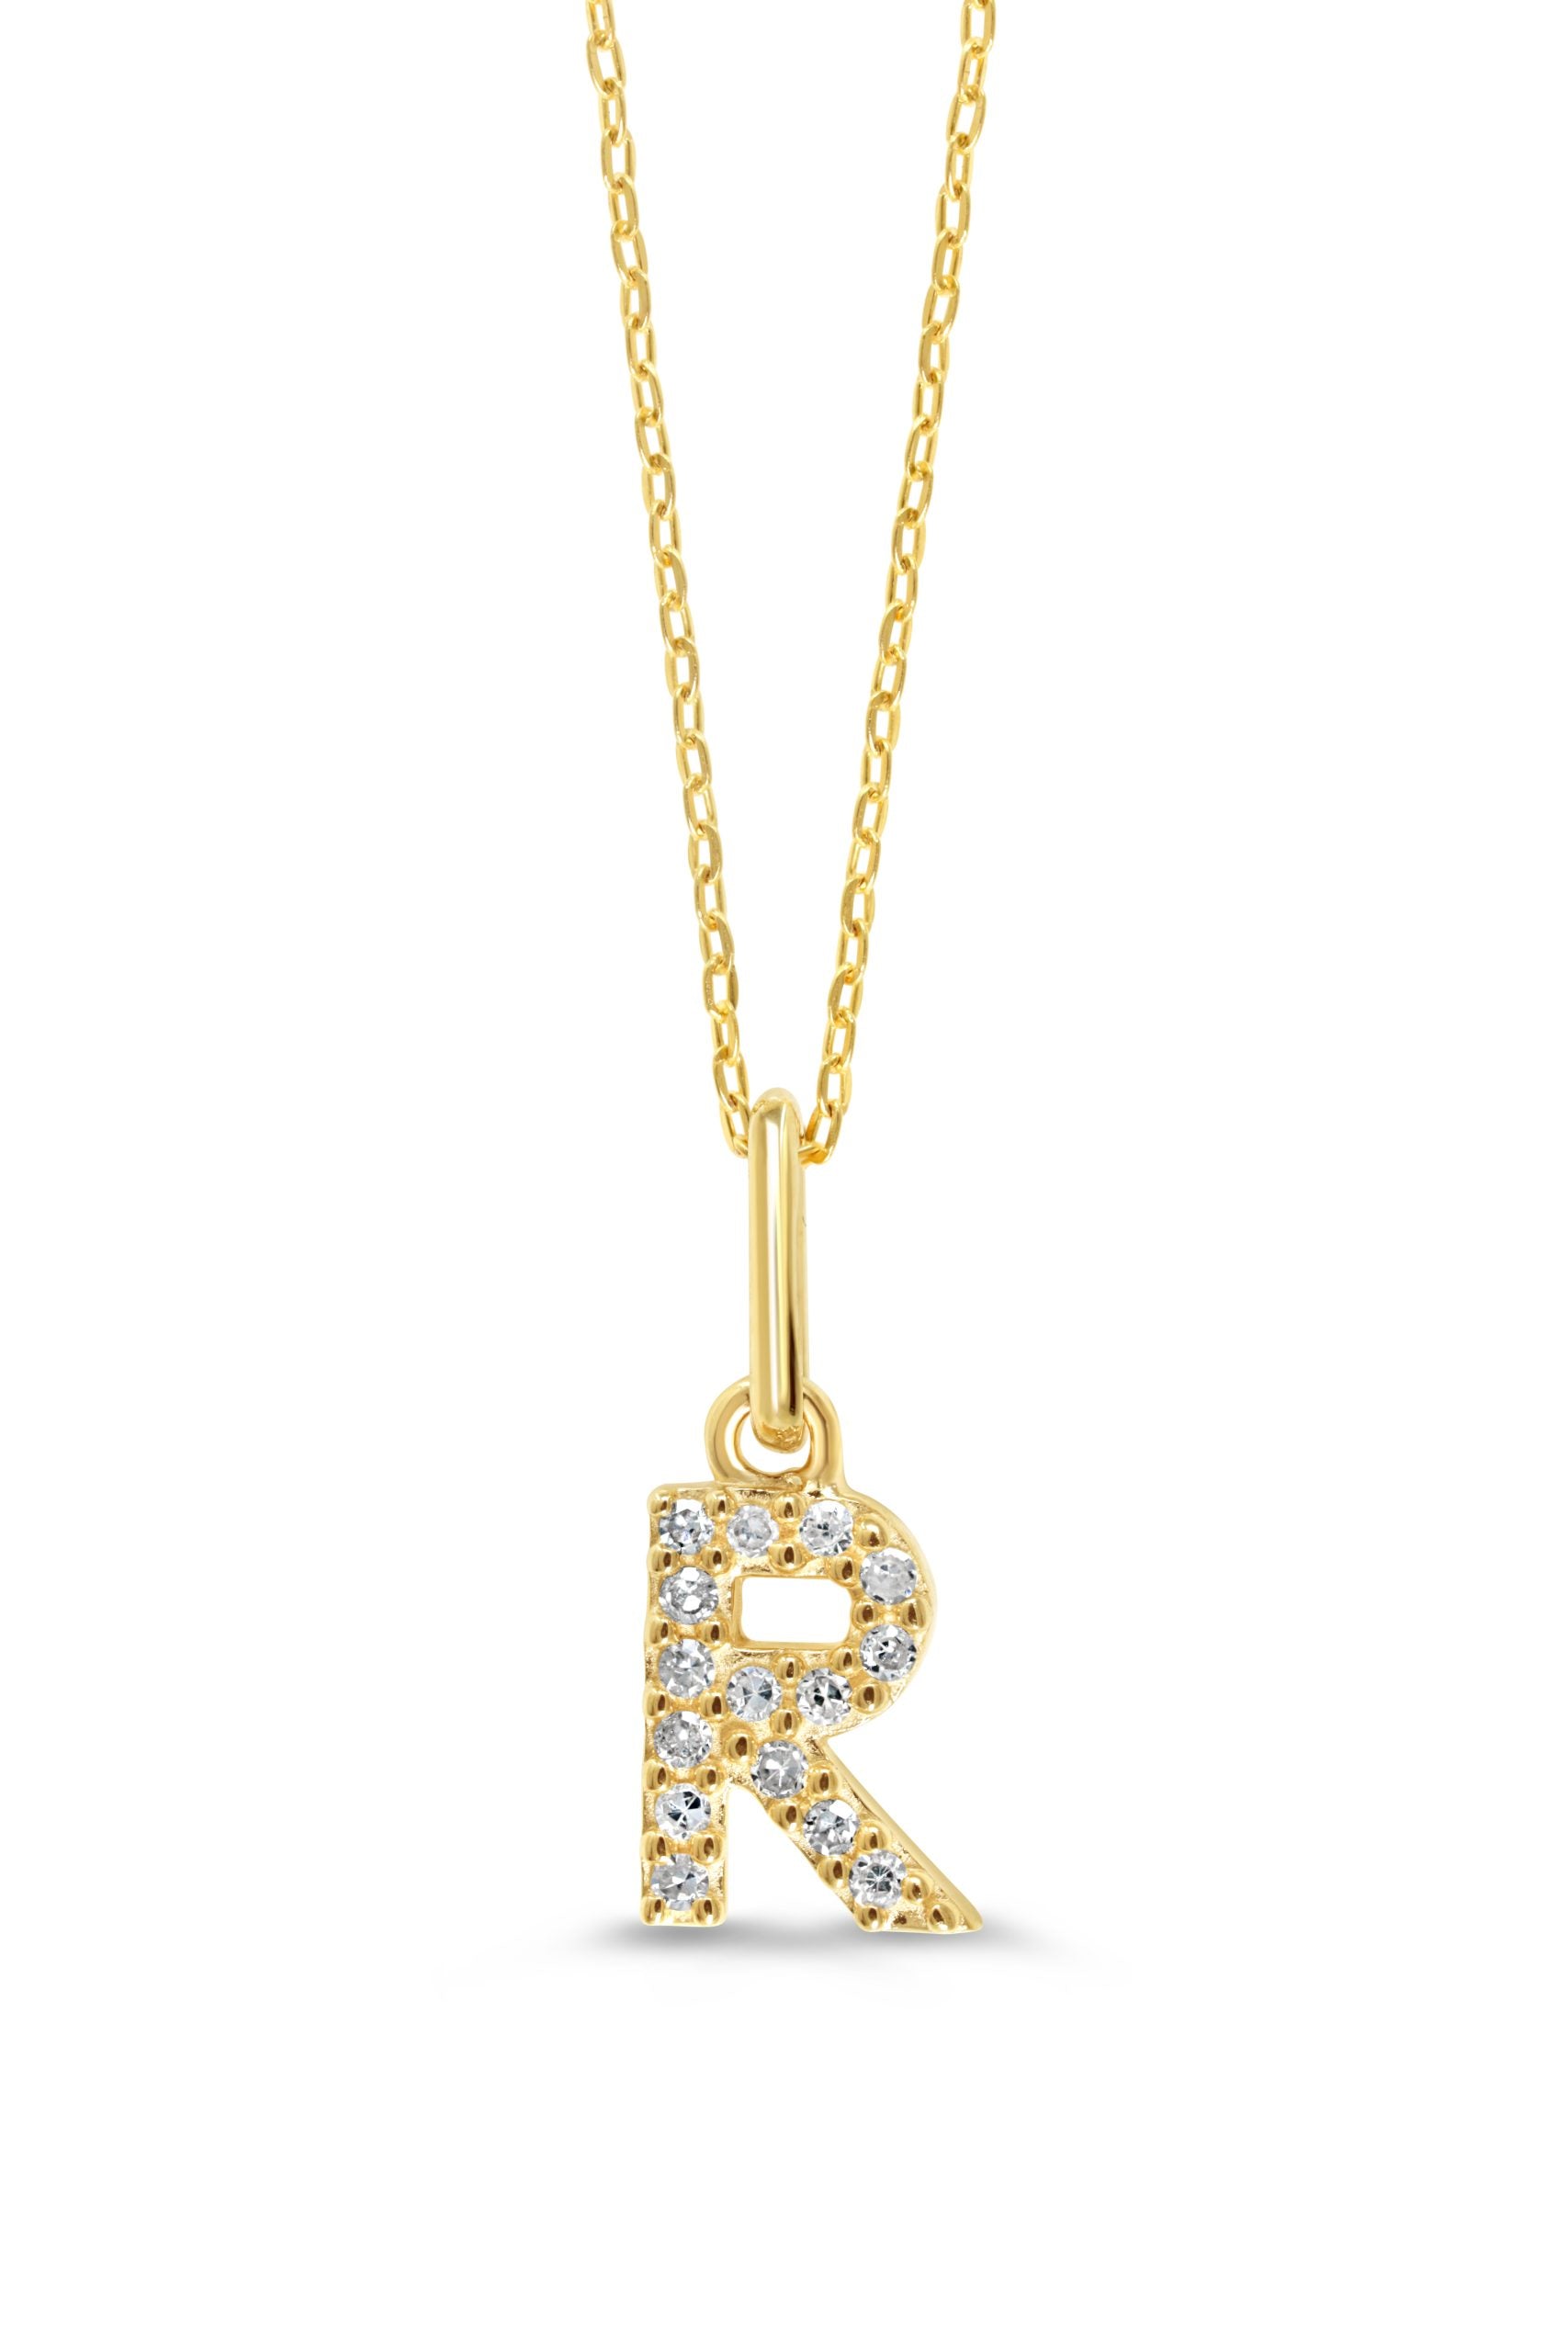 0.05 ct T.W. Diamonds "R" Initial Pendant in 10K Gold